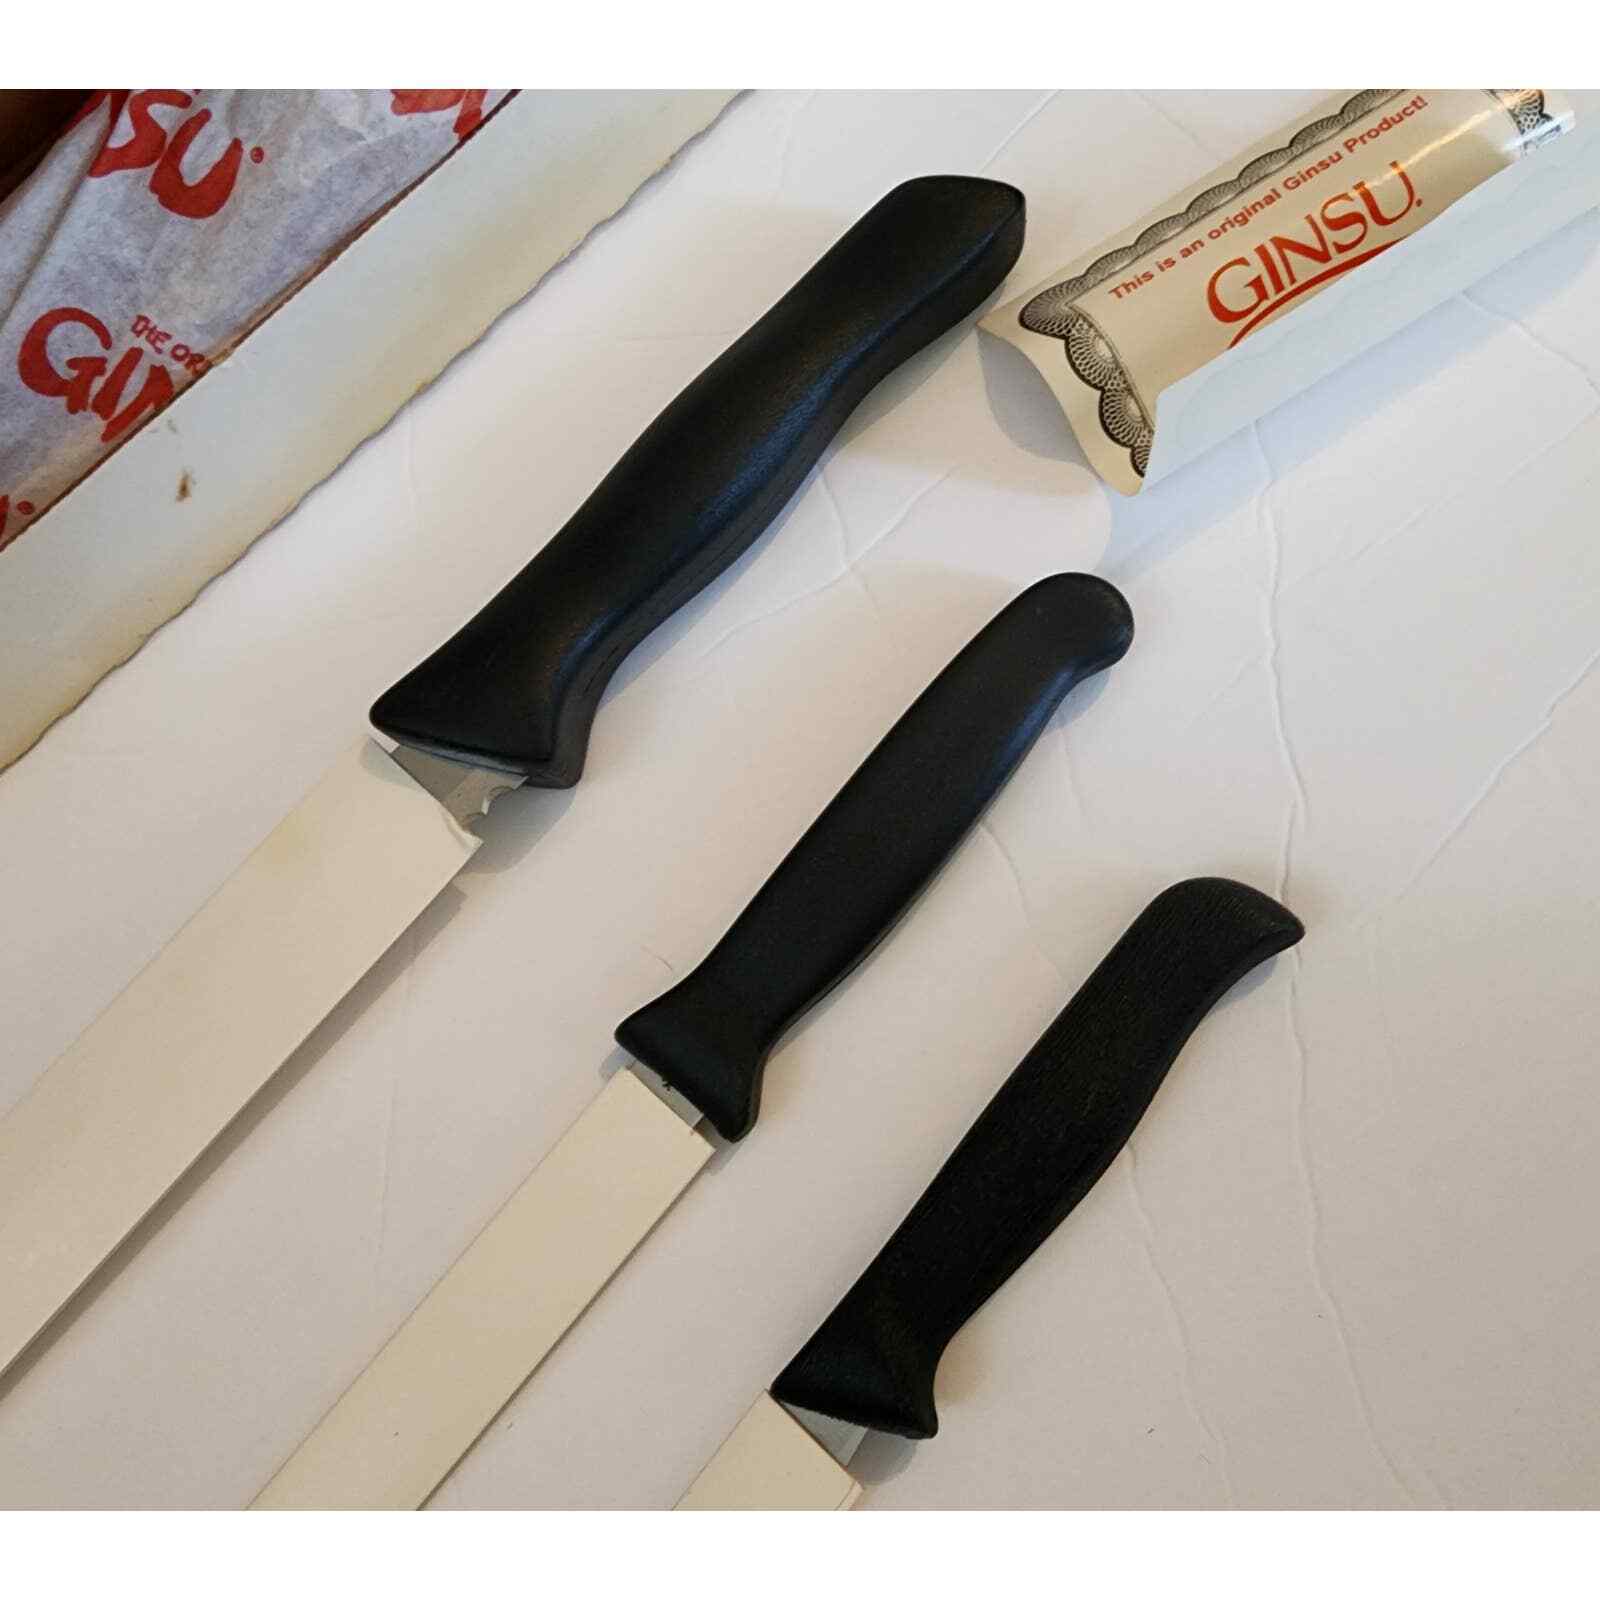 Ginsu Classic 3-Piece Knife Set Vintage With Original Box